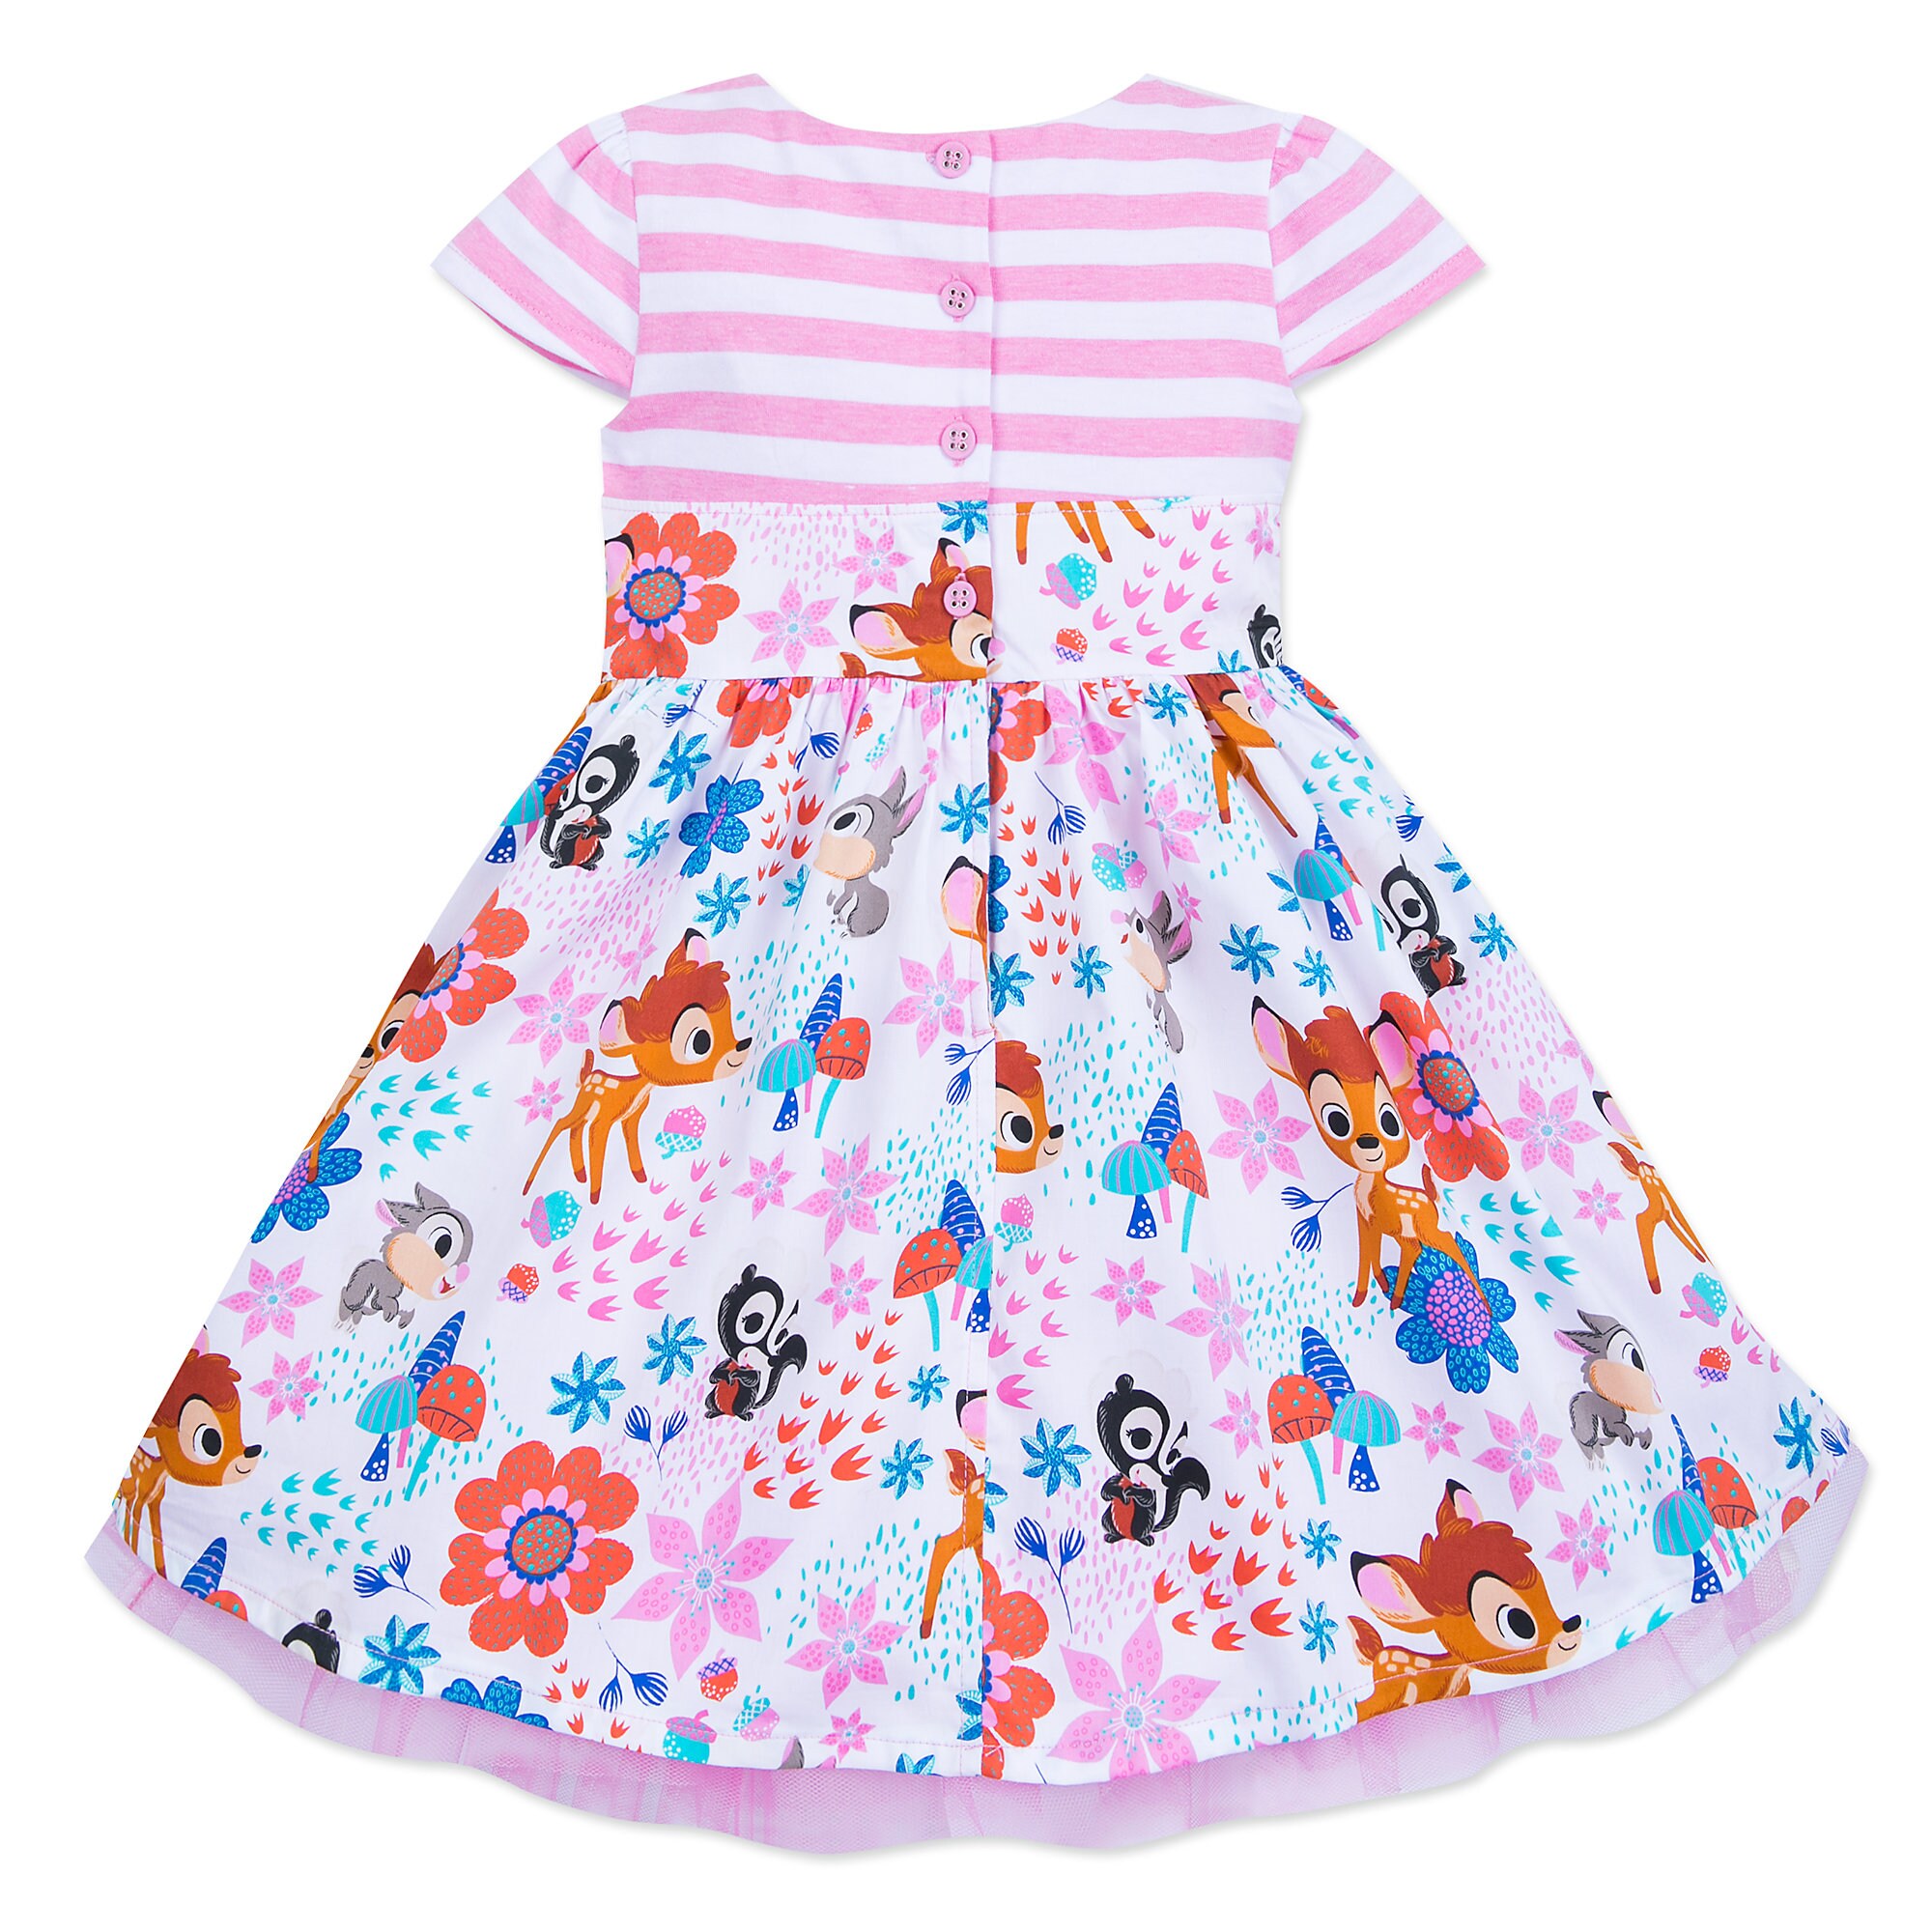 Bambi Dress and Socks Set for Girls - Disney Furrytale friends